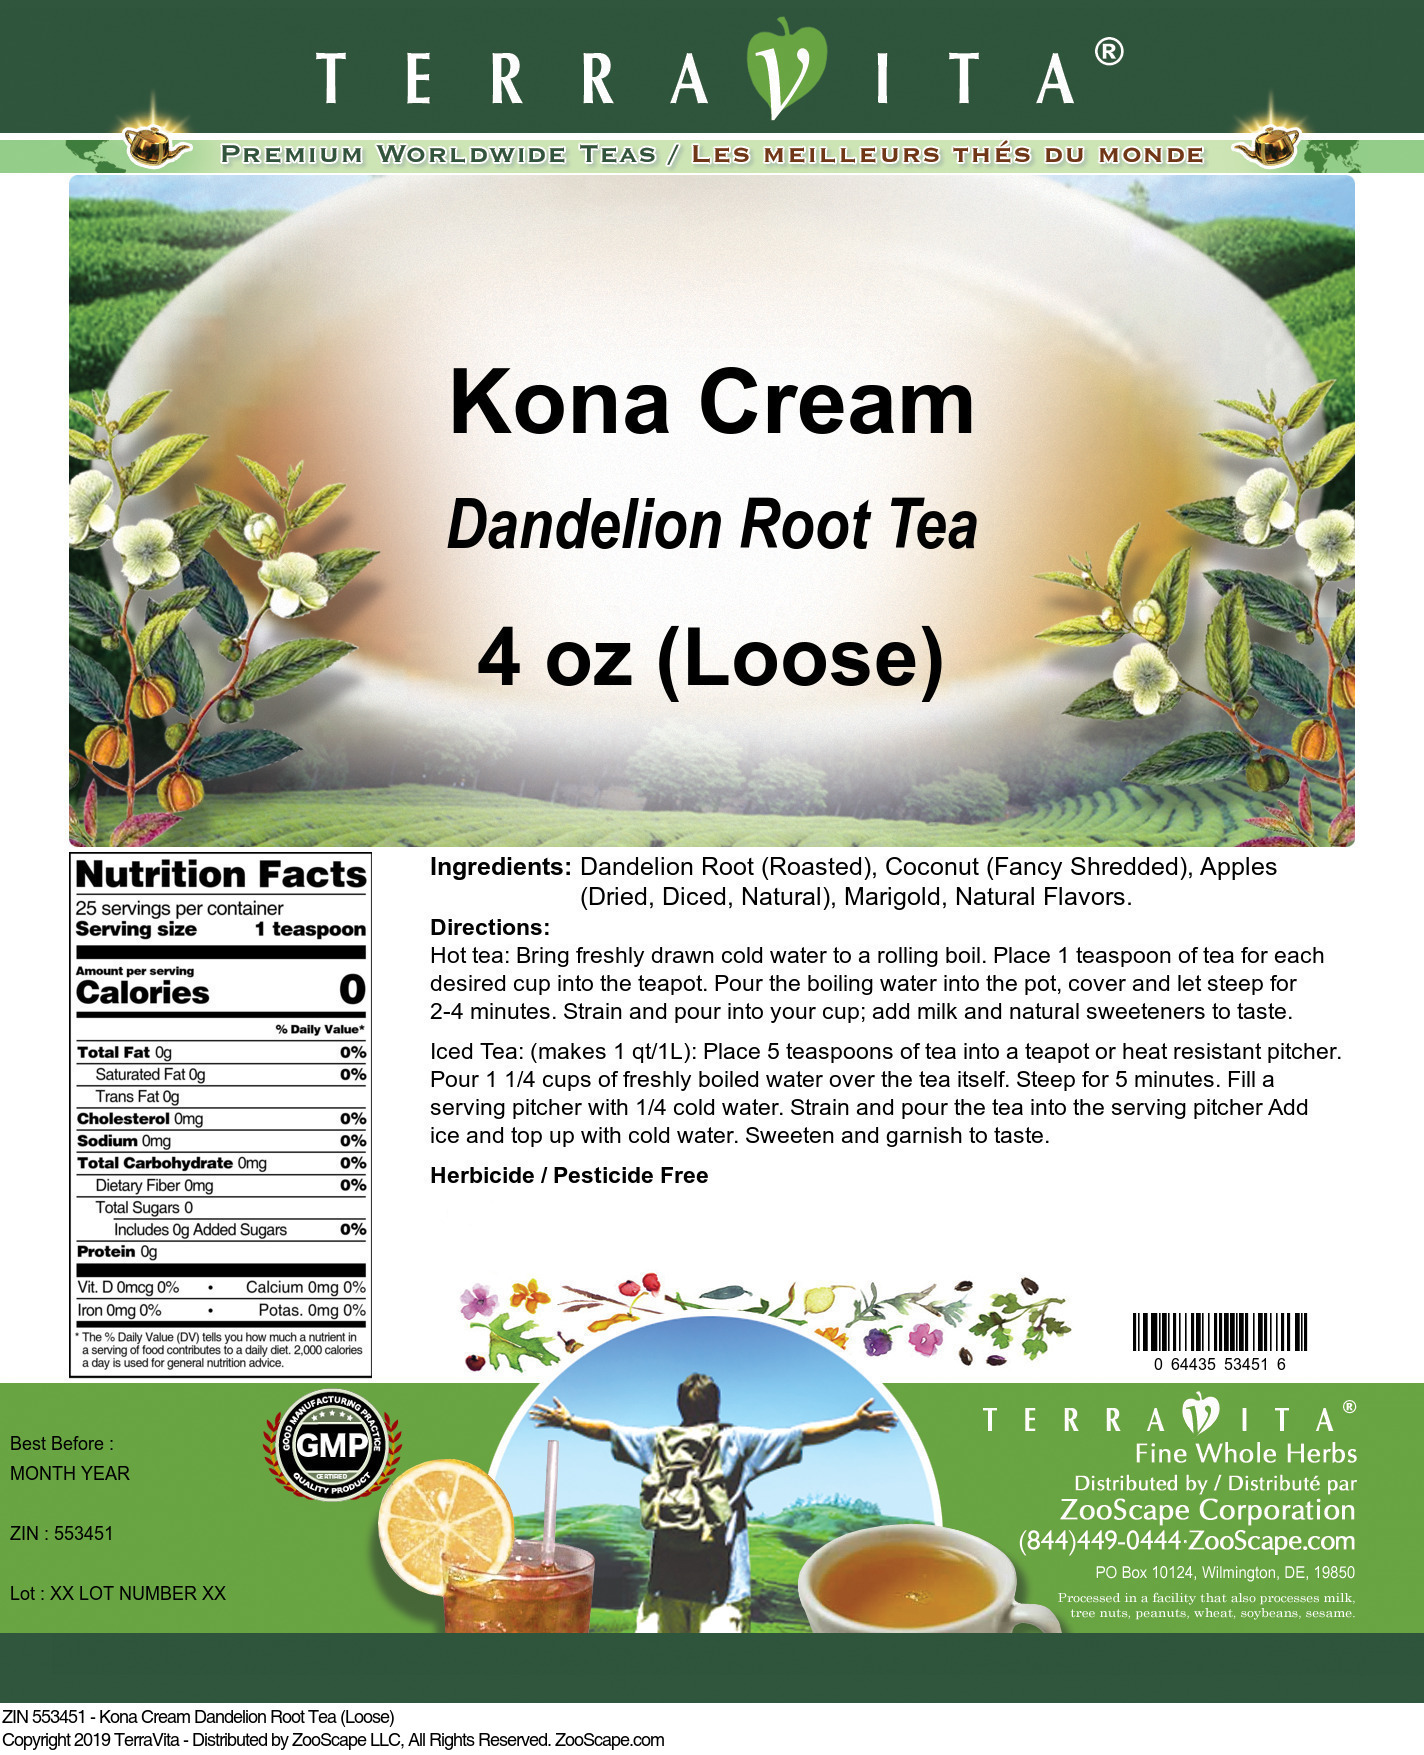 Kona Cream Dandelion Root Tea (Loose) - Label